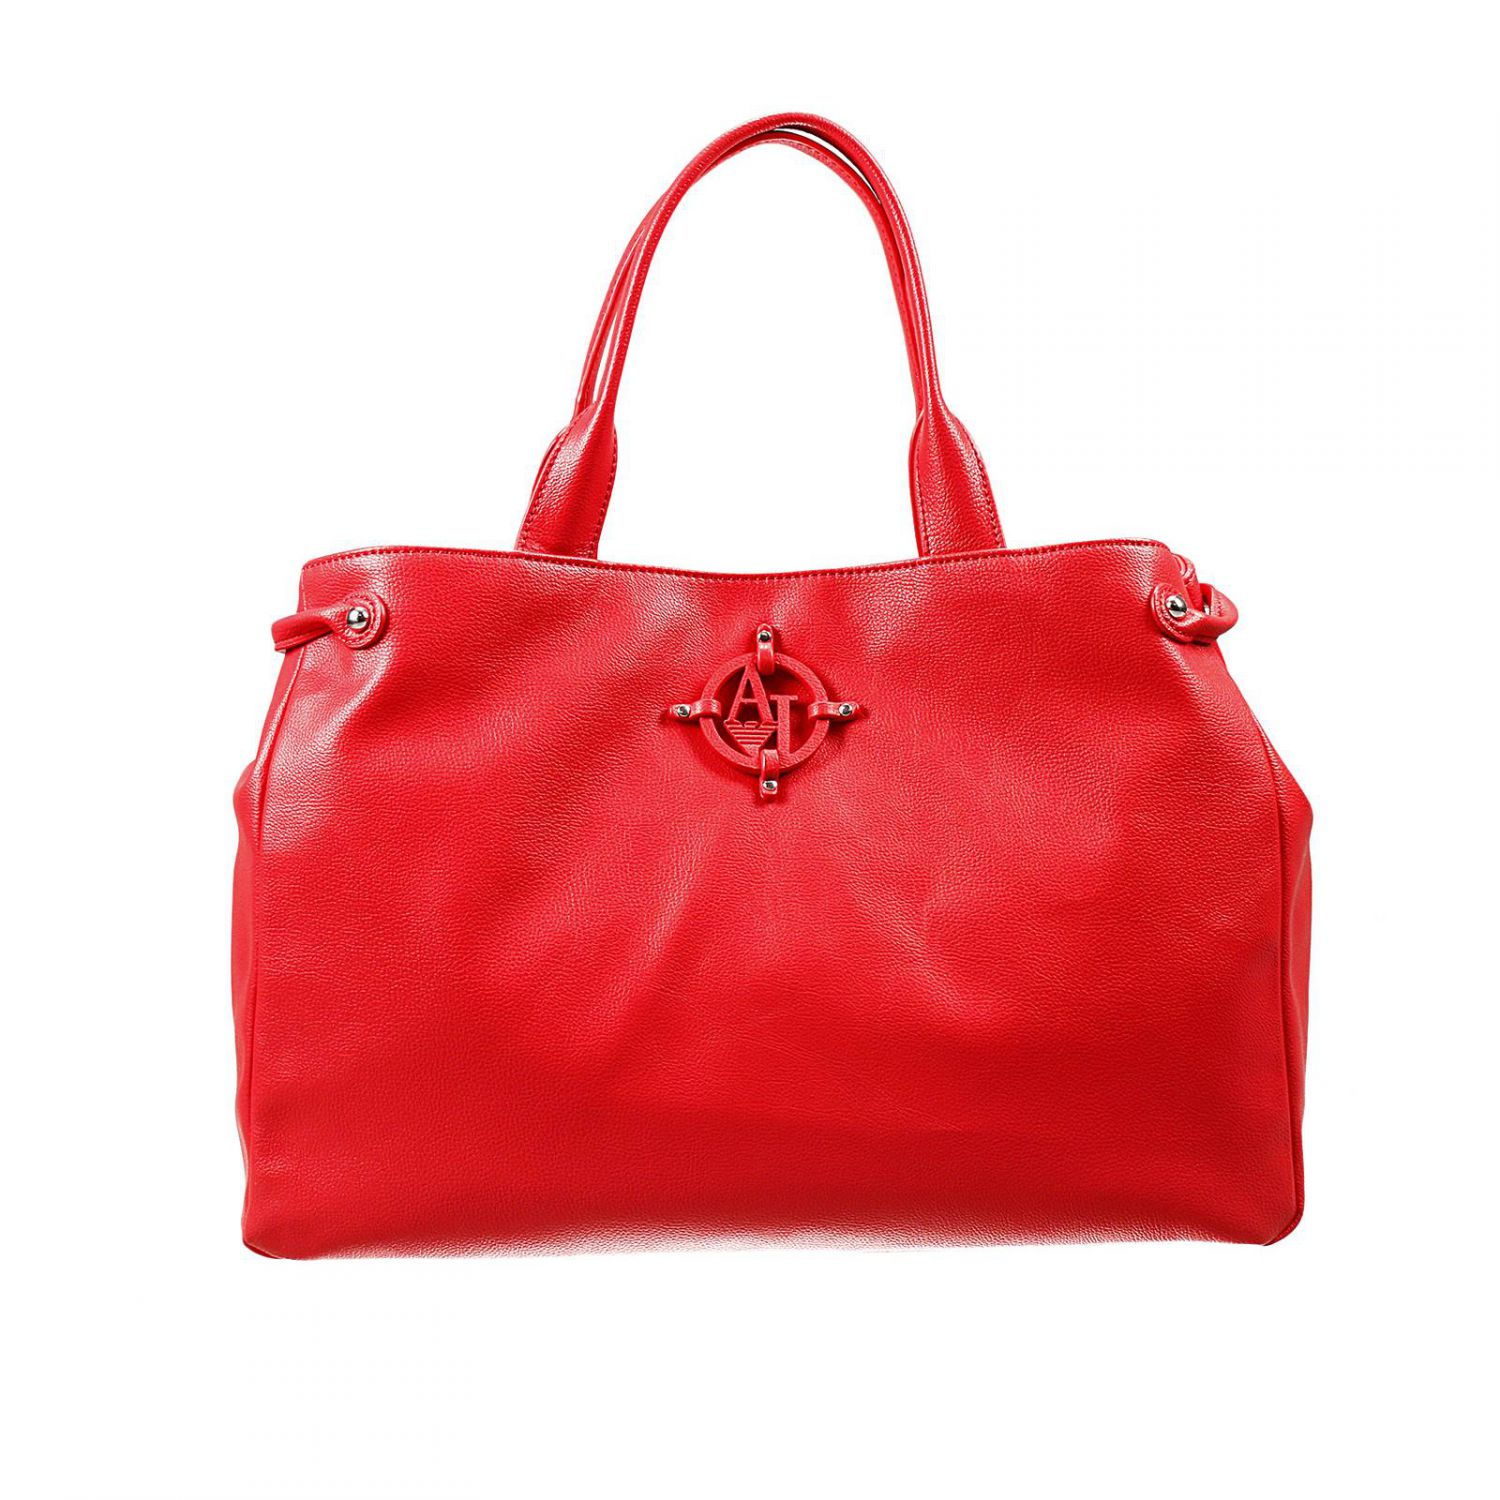 Giorgio armani Handbag Bag Ecoleather Grained Calf With Logo Shopping ...